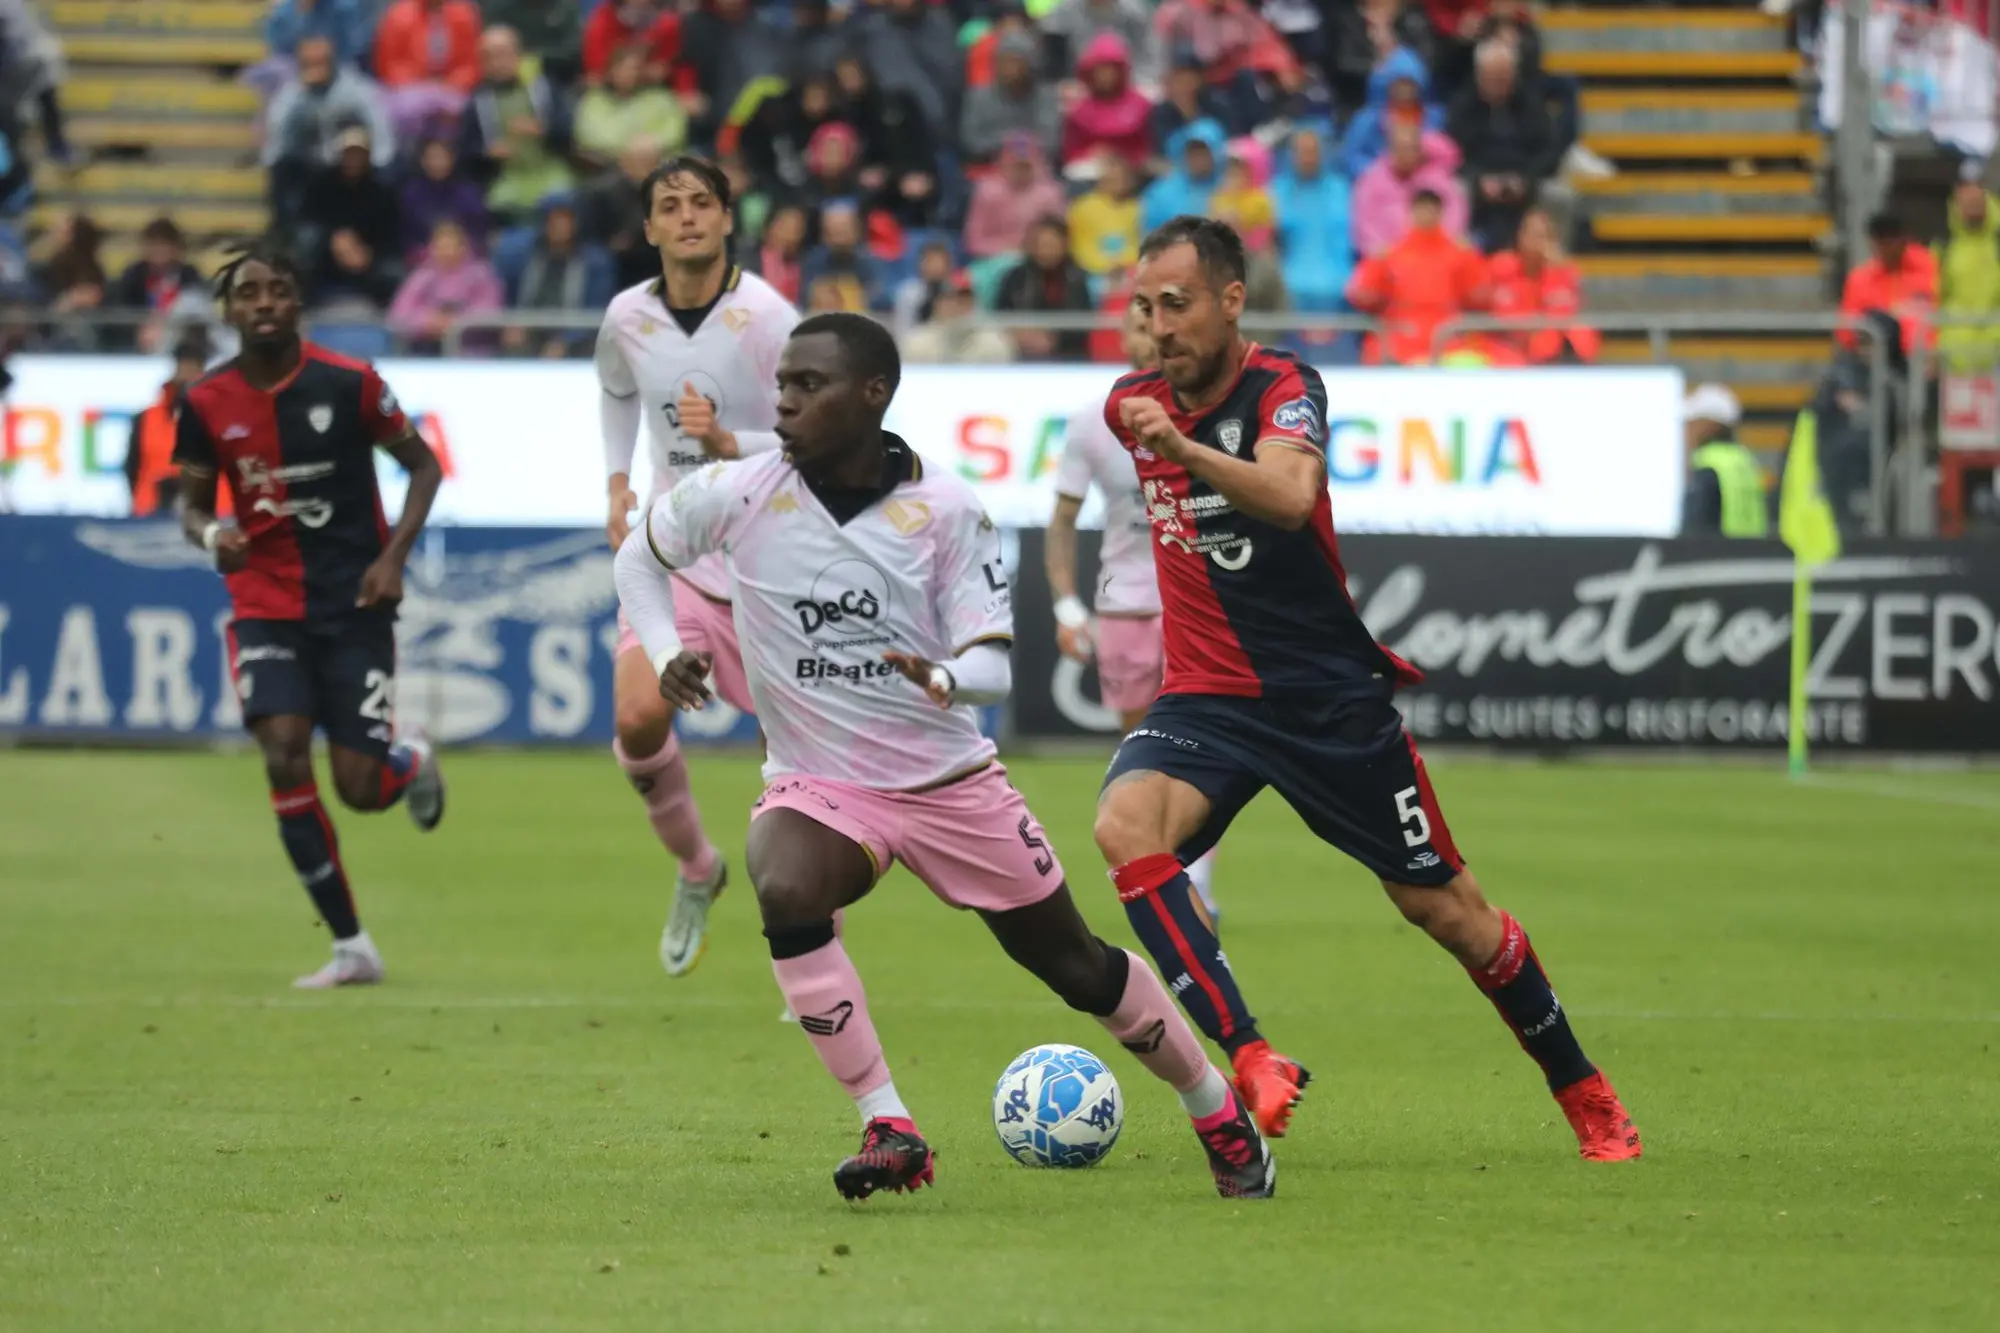 Mancosu in action against Palermo (Photo Max Solinas)